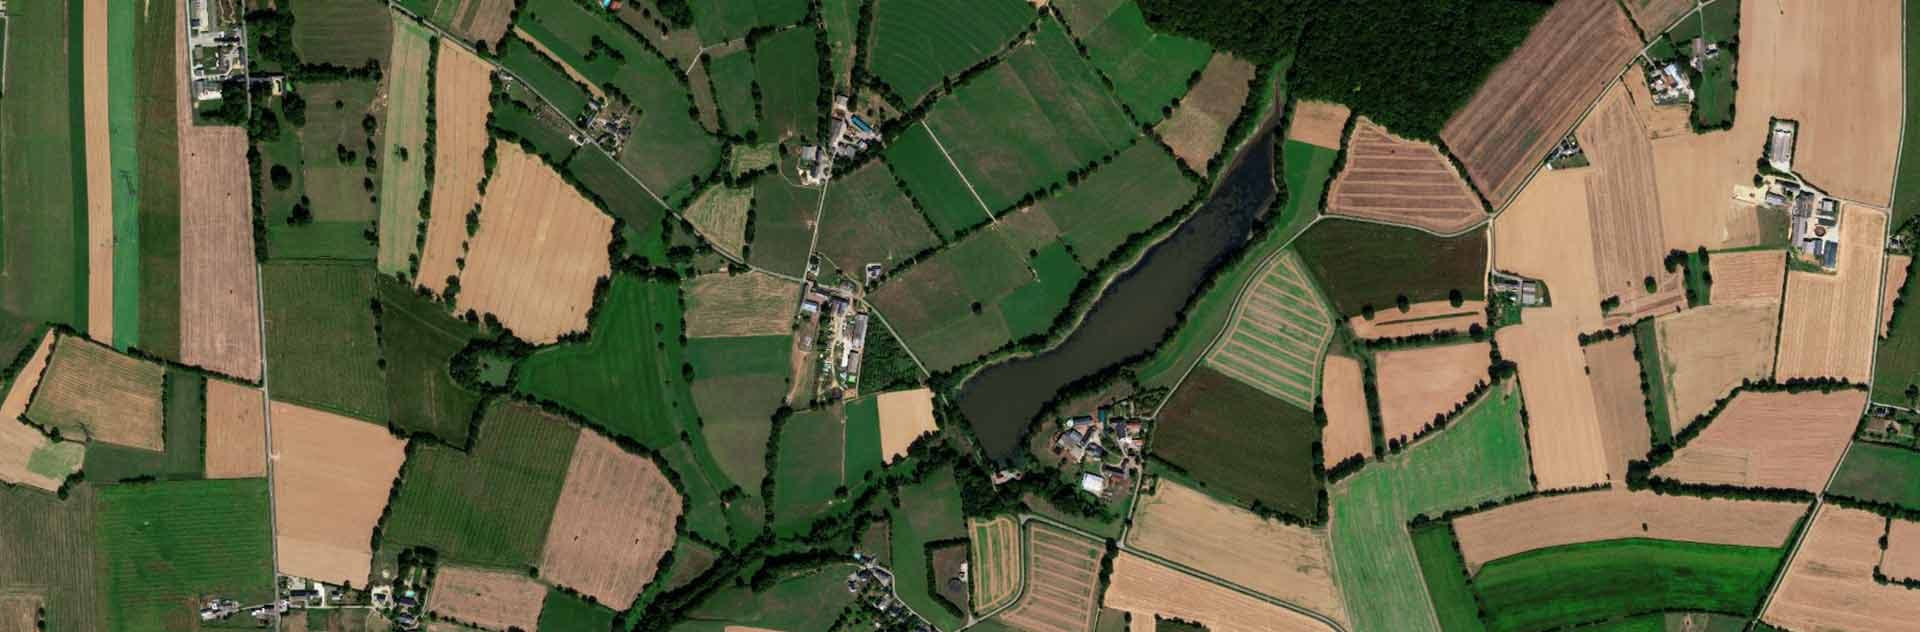 Pléiades Neo satellite image - 30cm resolution - Fields - Agriculture